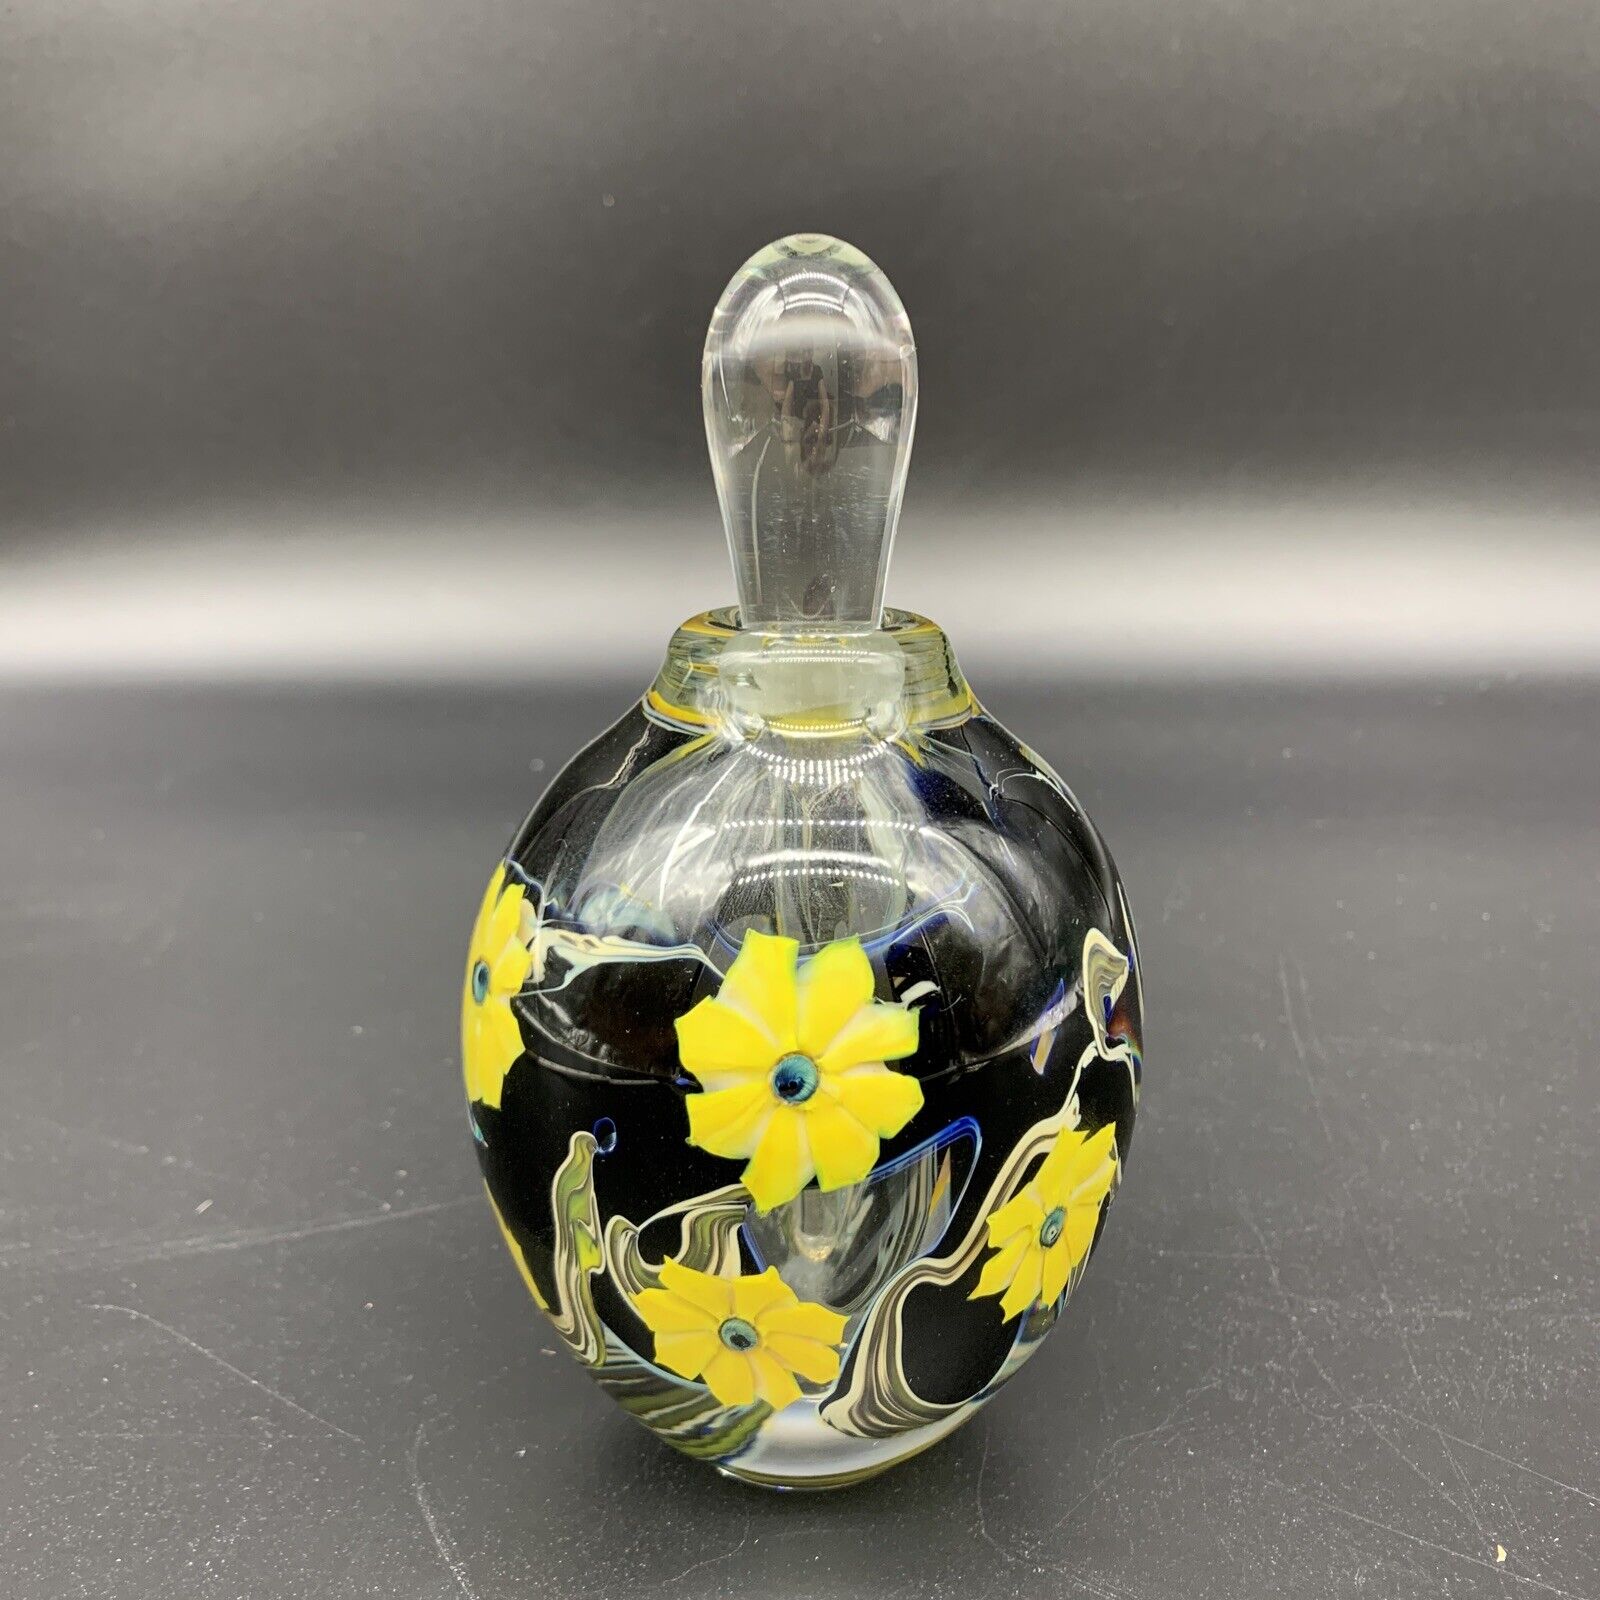 VTG Lotton Art Glass Perfume Bottle Signed Jeremiah Lotton 2009 Yellow Flowers 